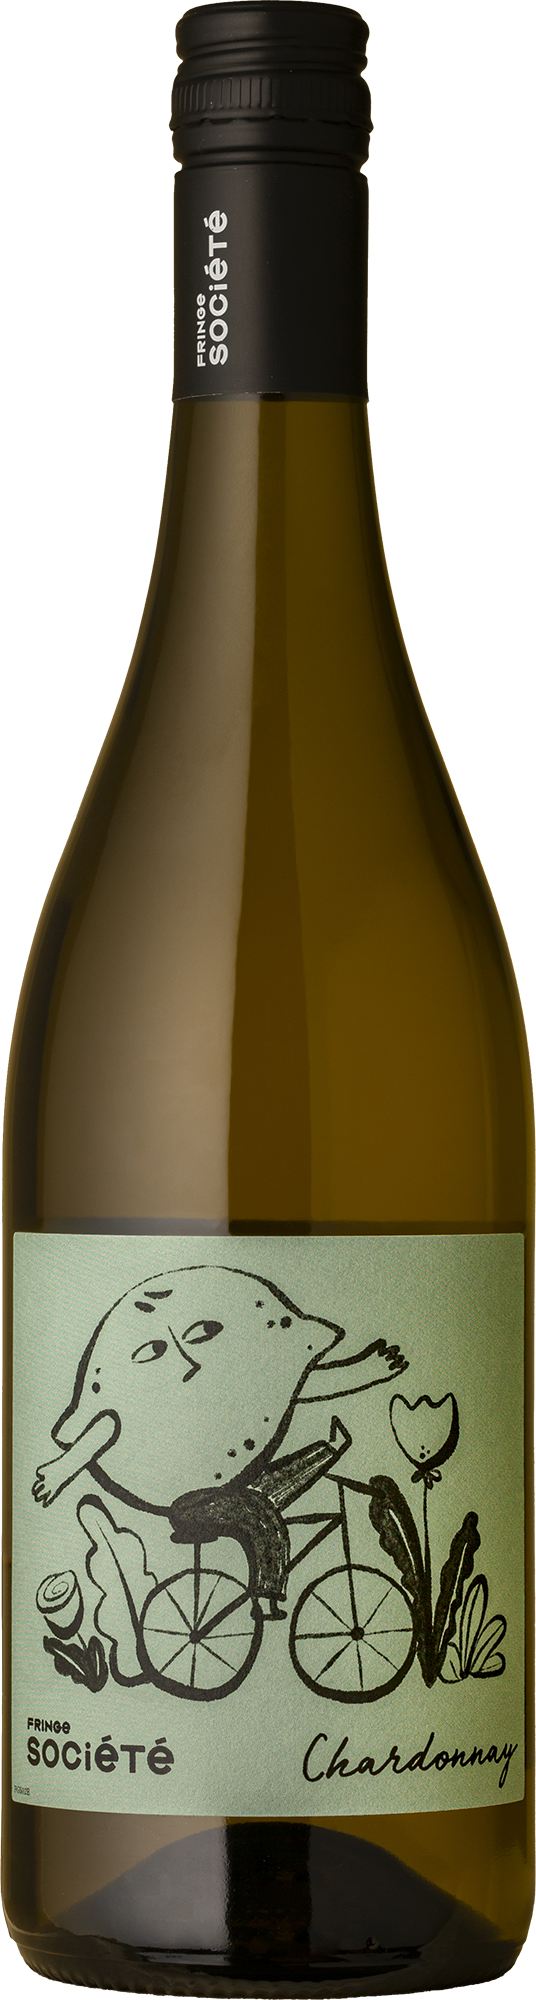 Fringe Société - Chardonnay 2020 White Wine